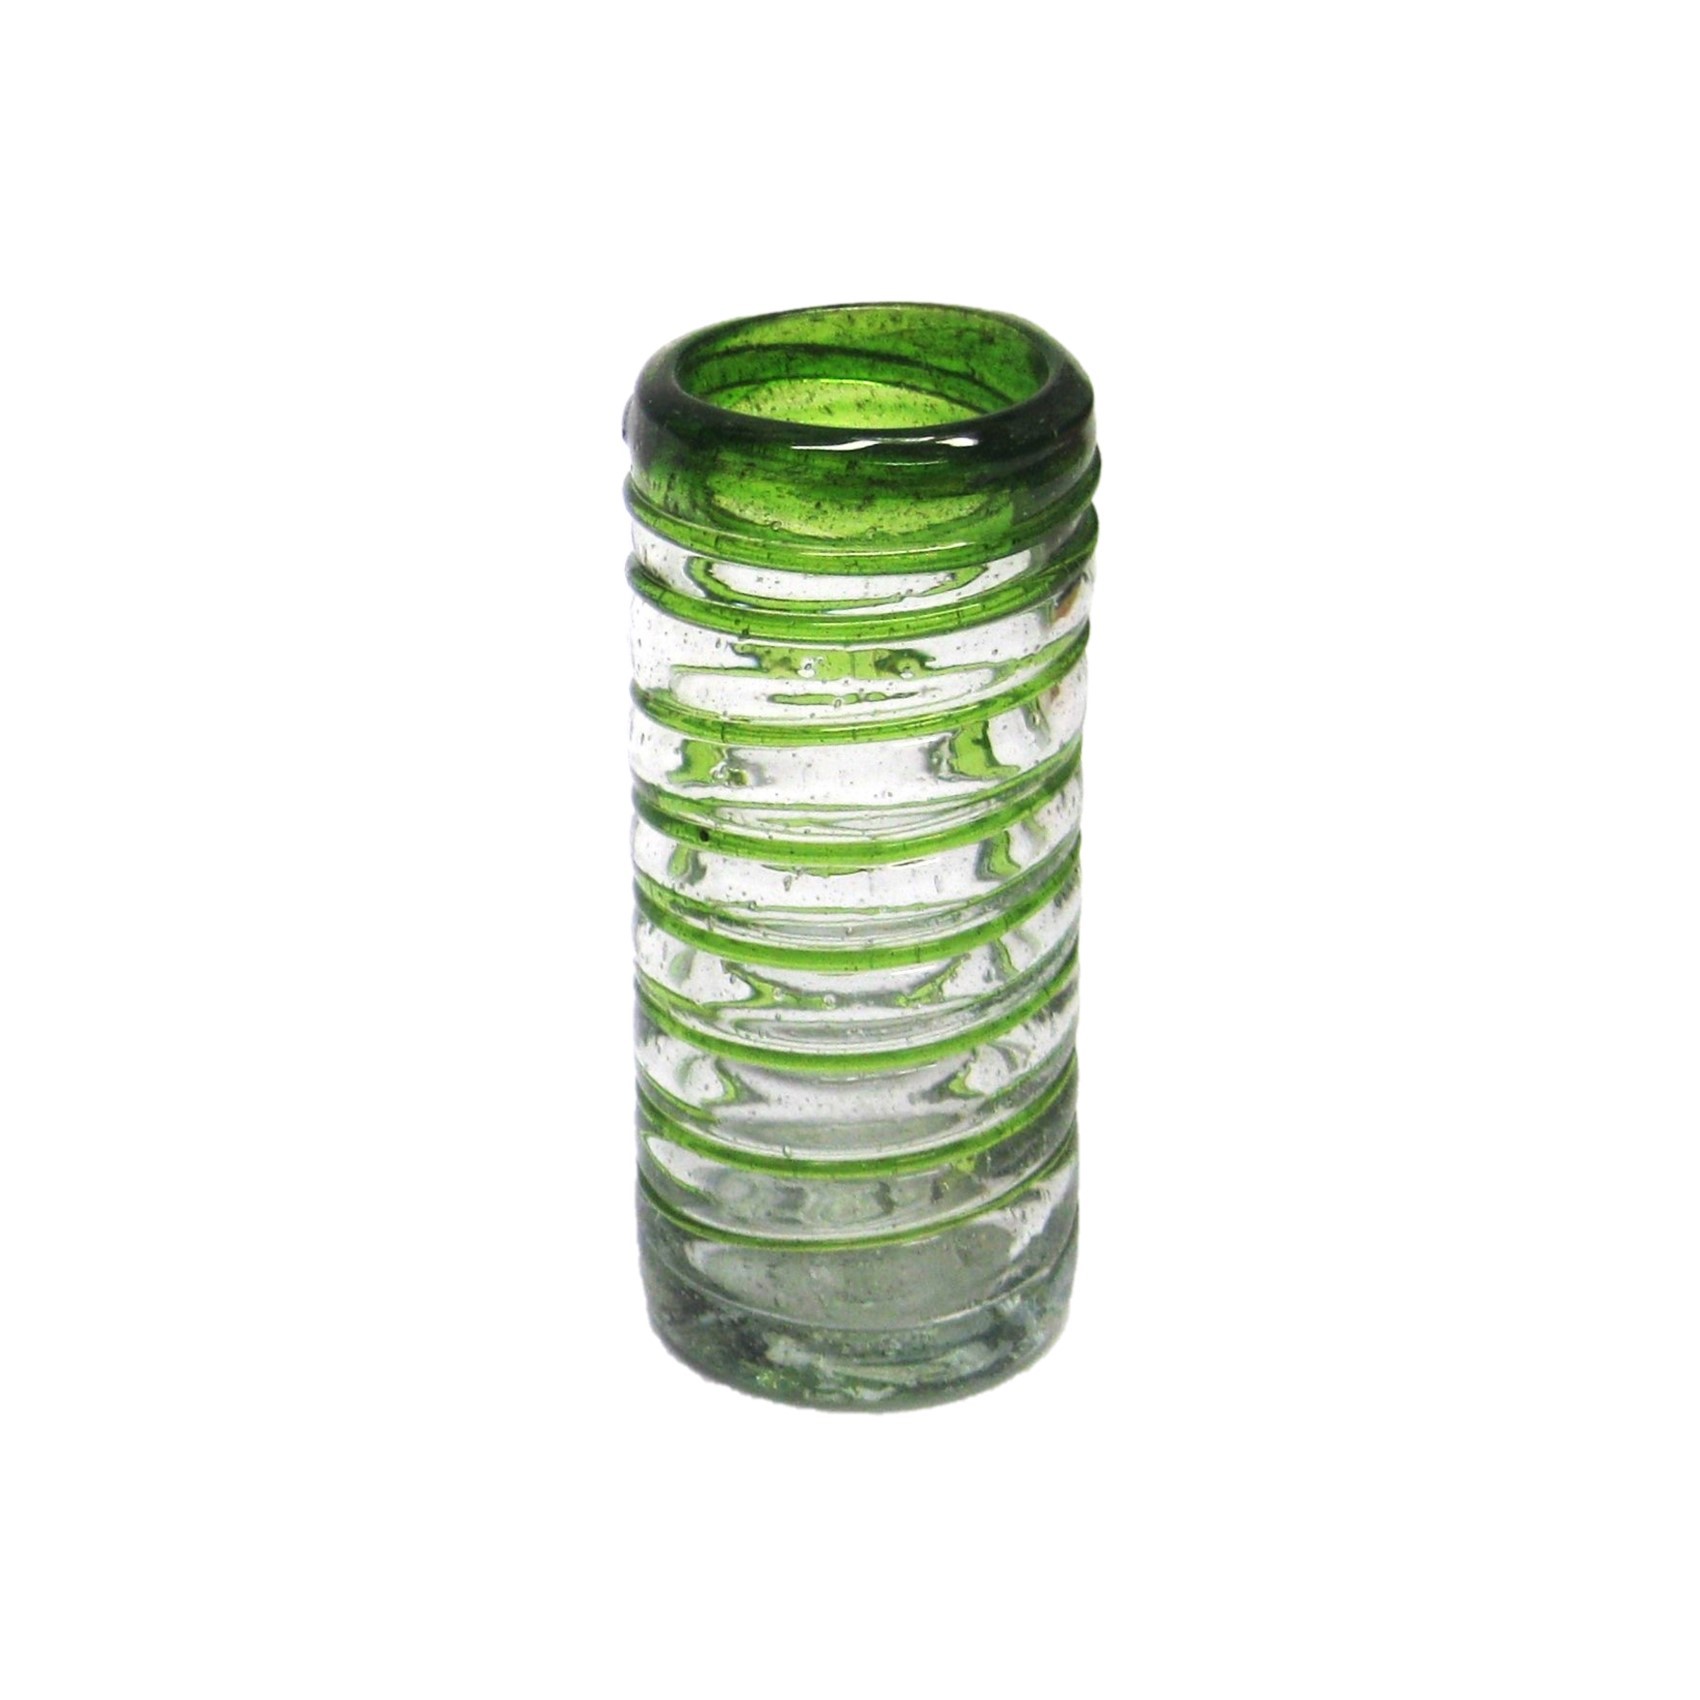 Emerald Green Spiral 2 oz Tequila Shot Glasses (set of 6)